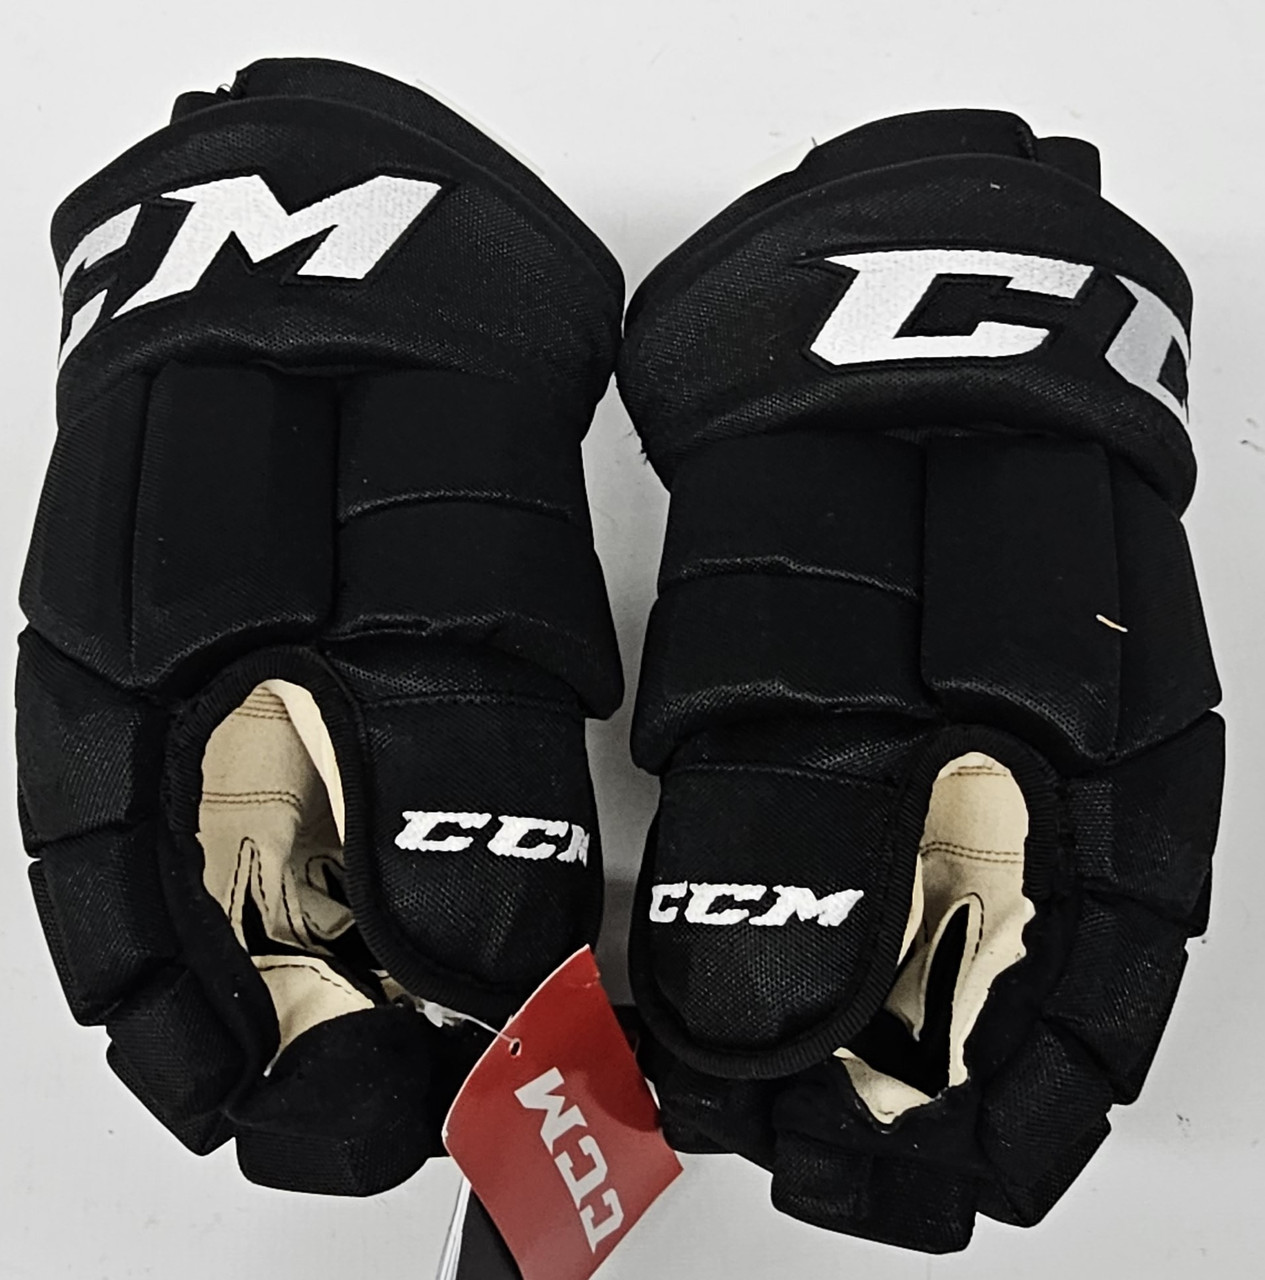 CCM HGTKPP Pro Stock Hockey Gloves 14 New York Rangers used #28 - DK's  Hockey Shop